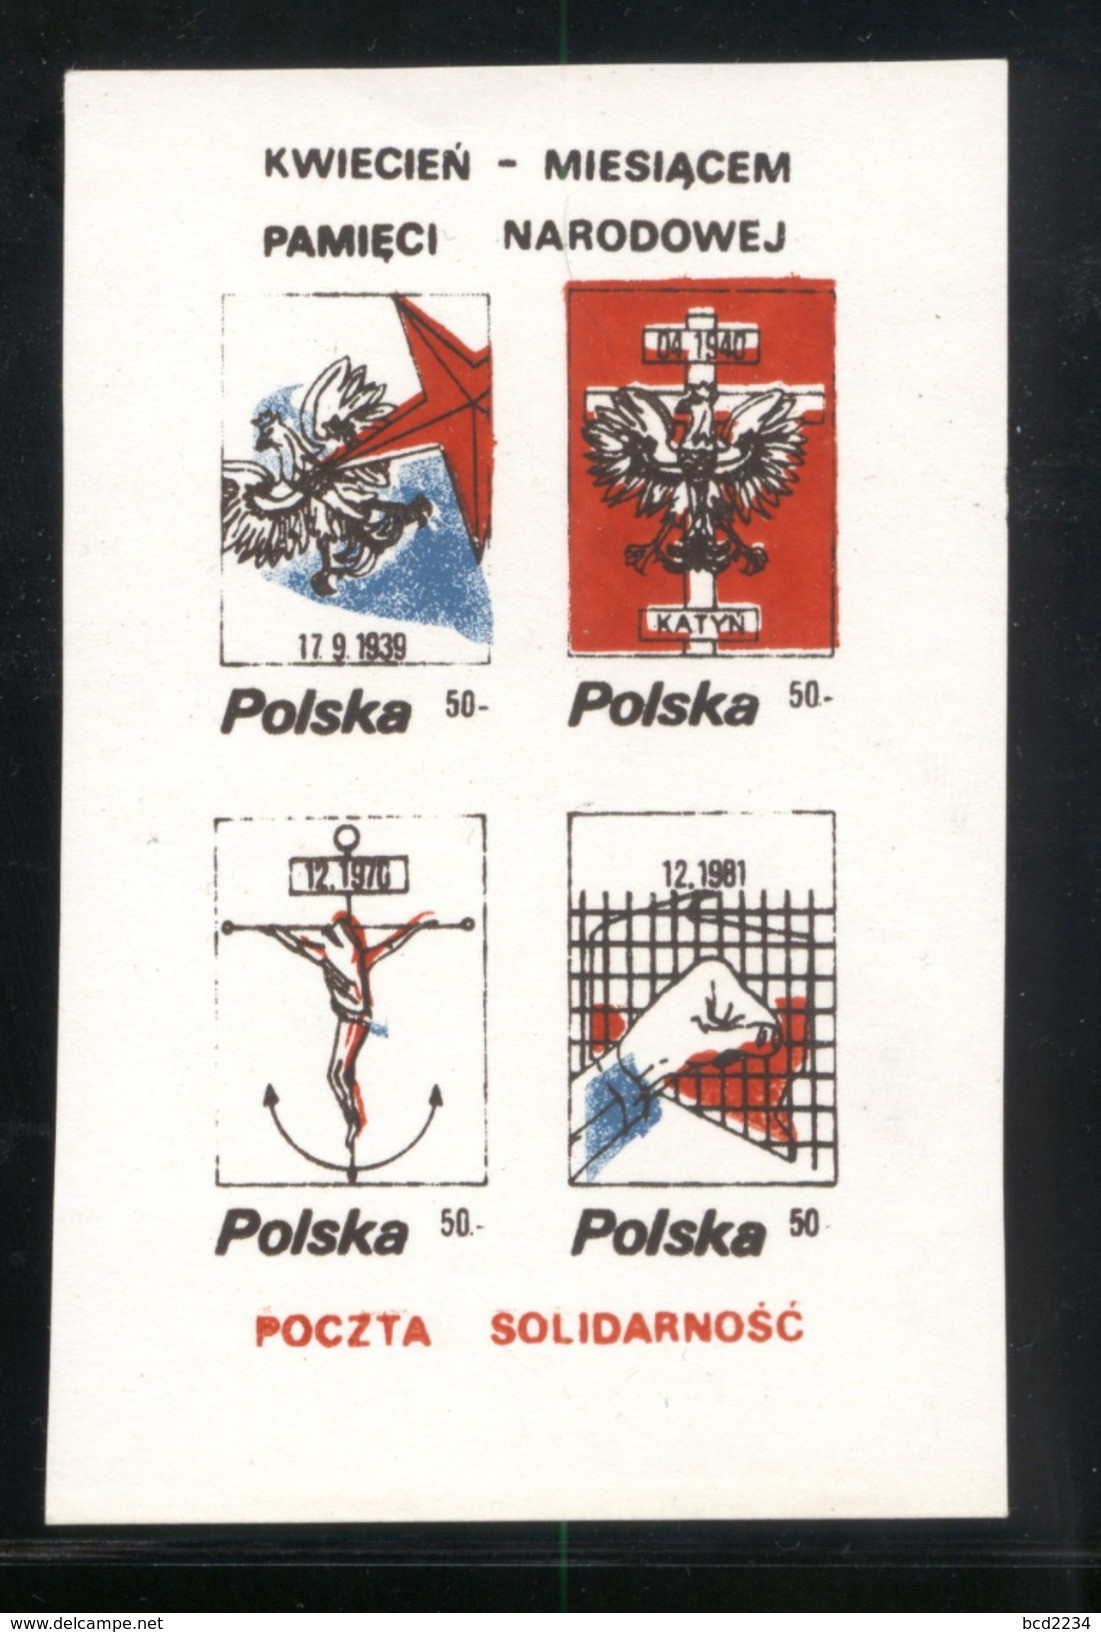 POLAND SOLIDARNOSC SOLIDARITY (POCZTA SOLIDARNOSC) APRIL NATIONAL MONTH OF REMEMBRANCE MS KATYN WW2 WORLD WAR 2 - Solidarnosc-Vignetten